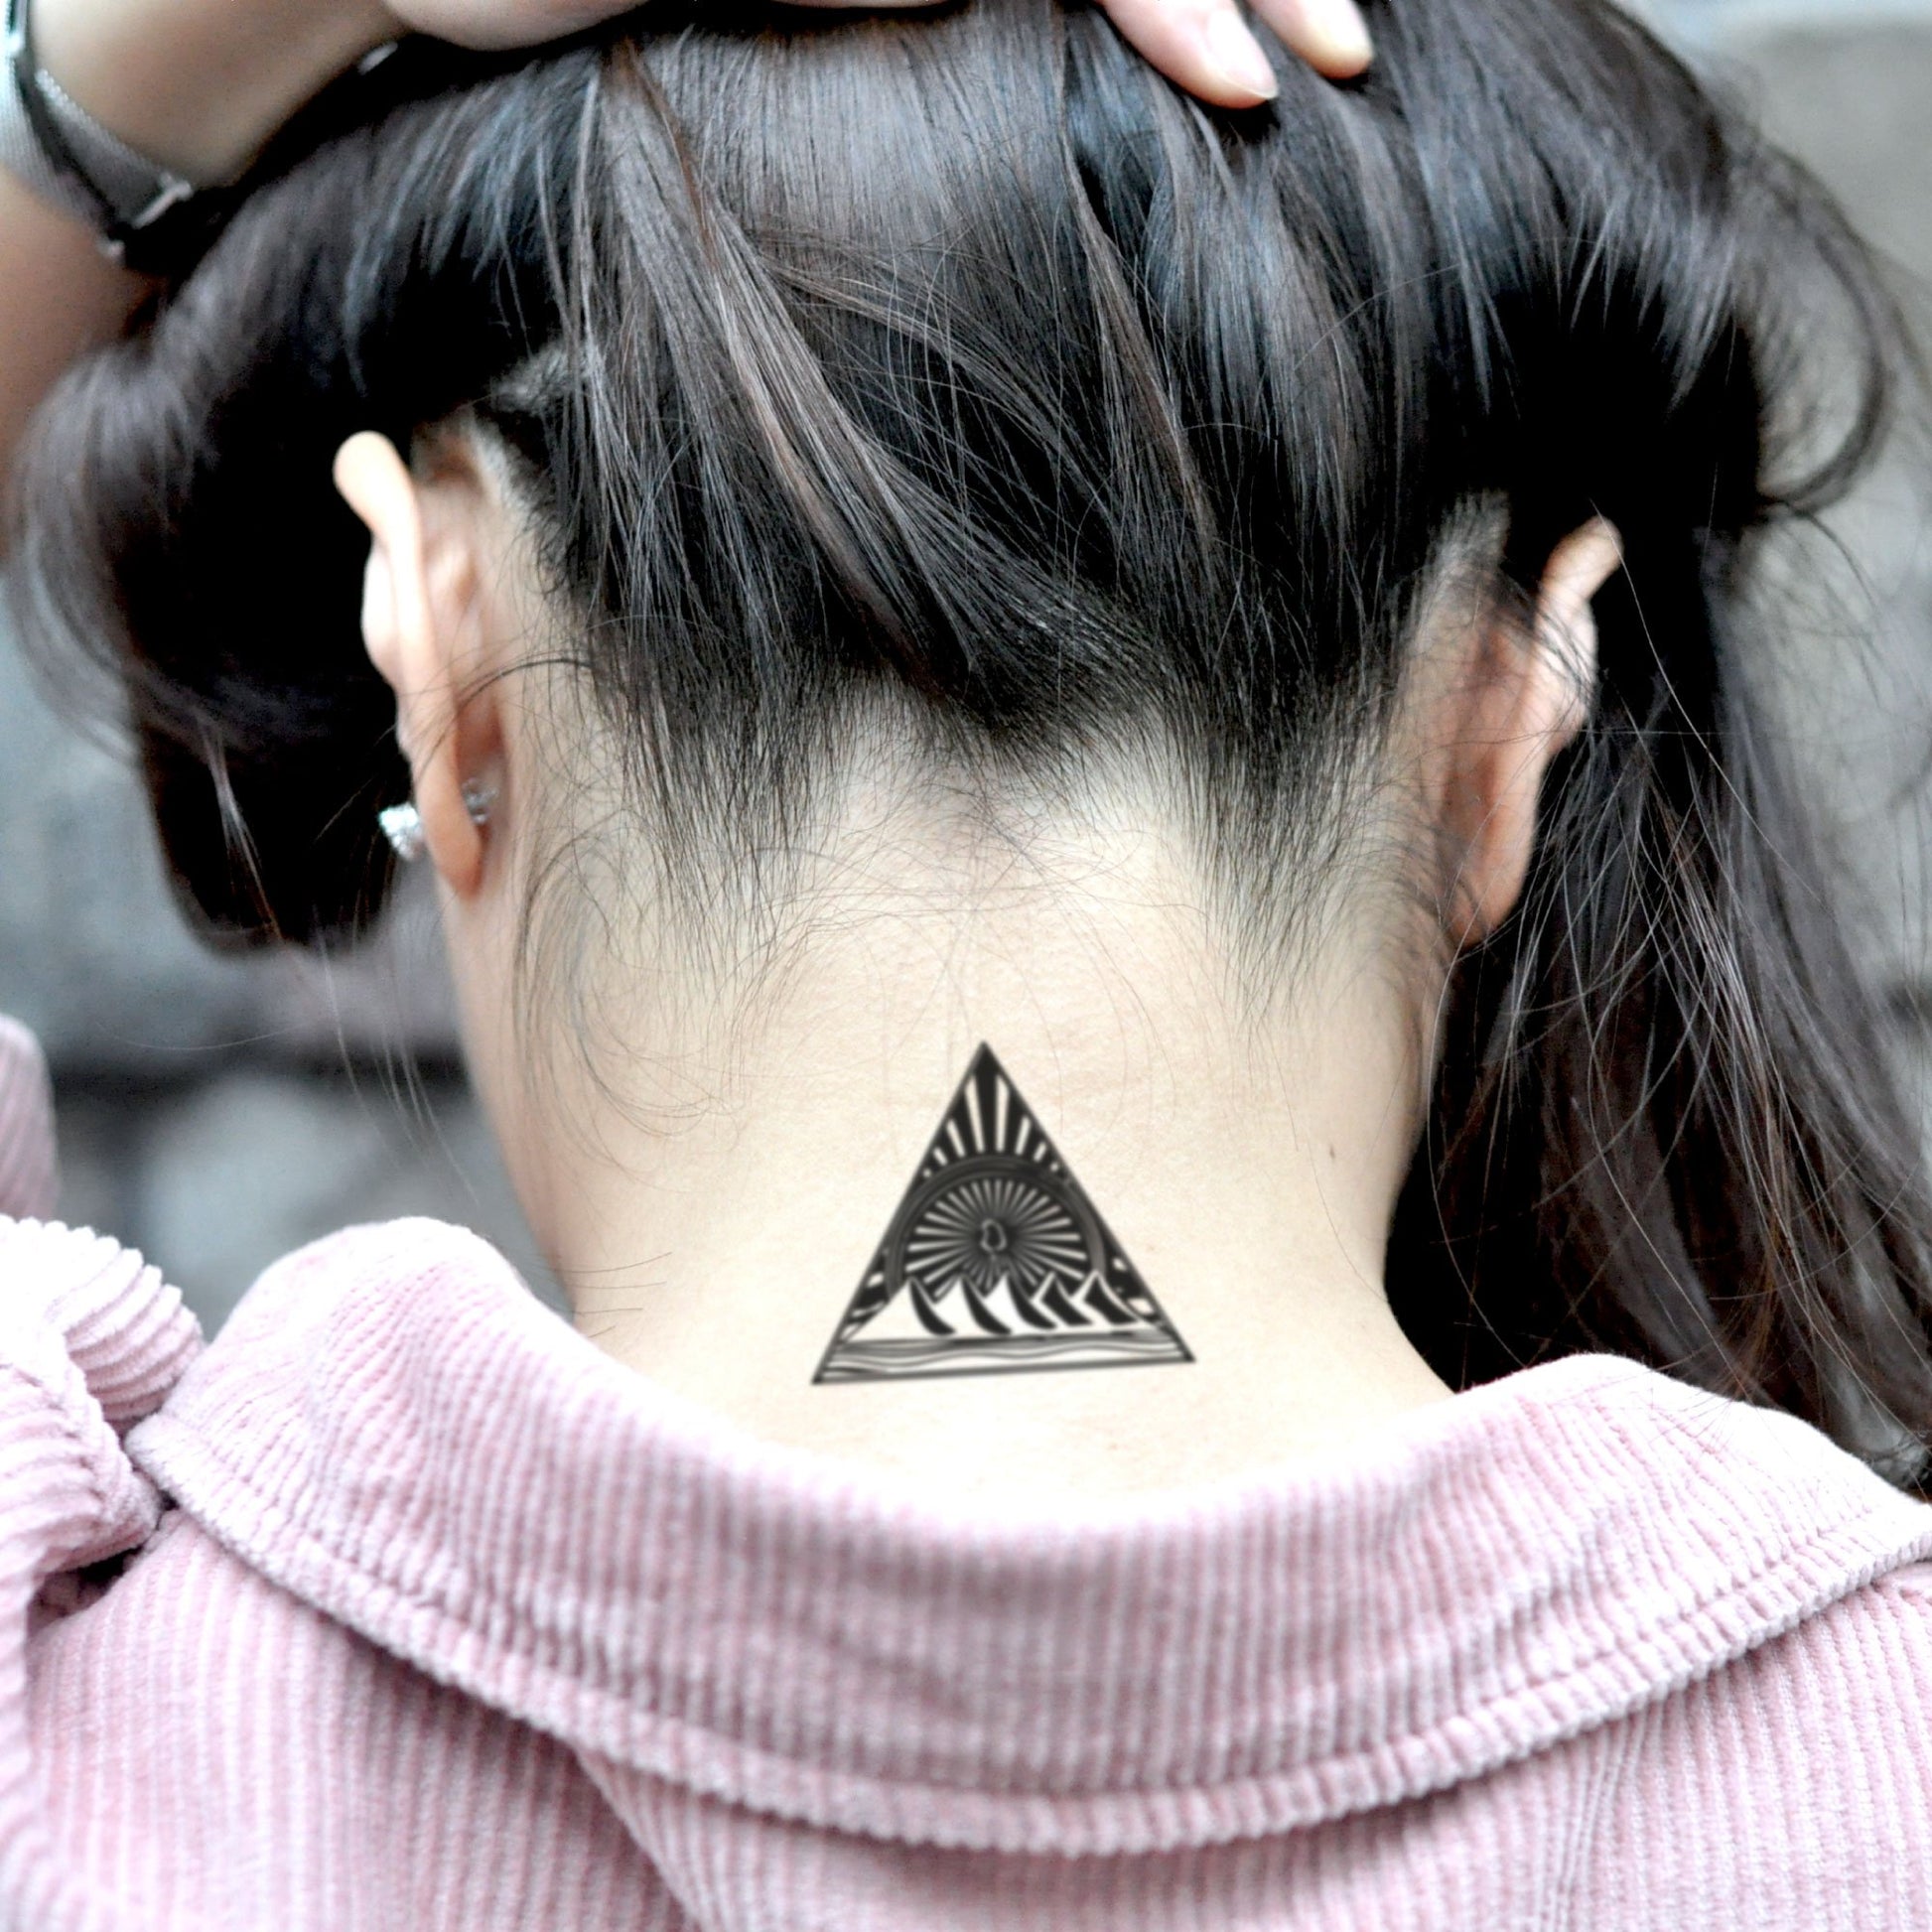 fake small nicaragua nicaraguan symbol outline tribal temporary tattoo sticker design idea on neck